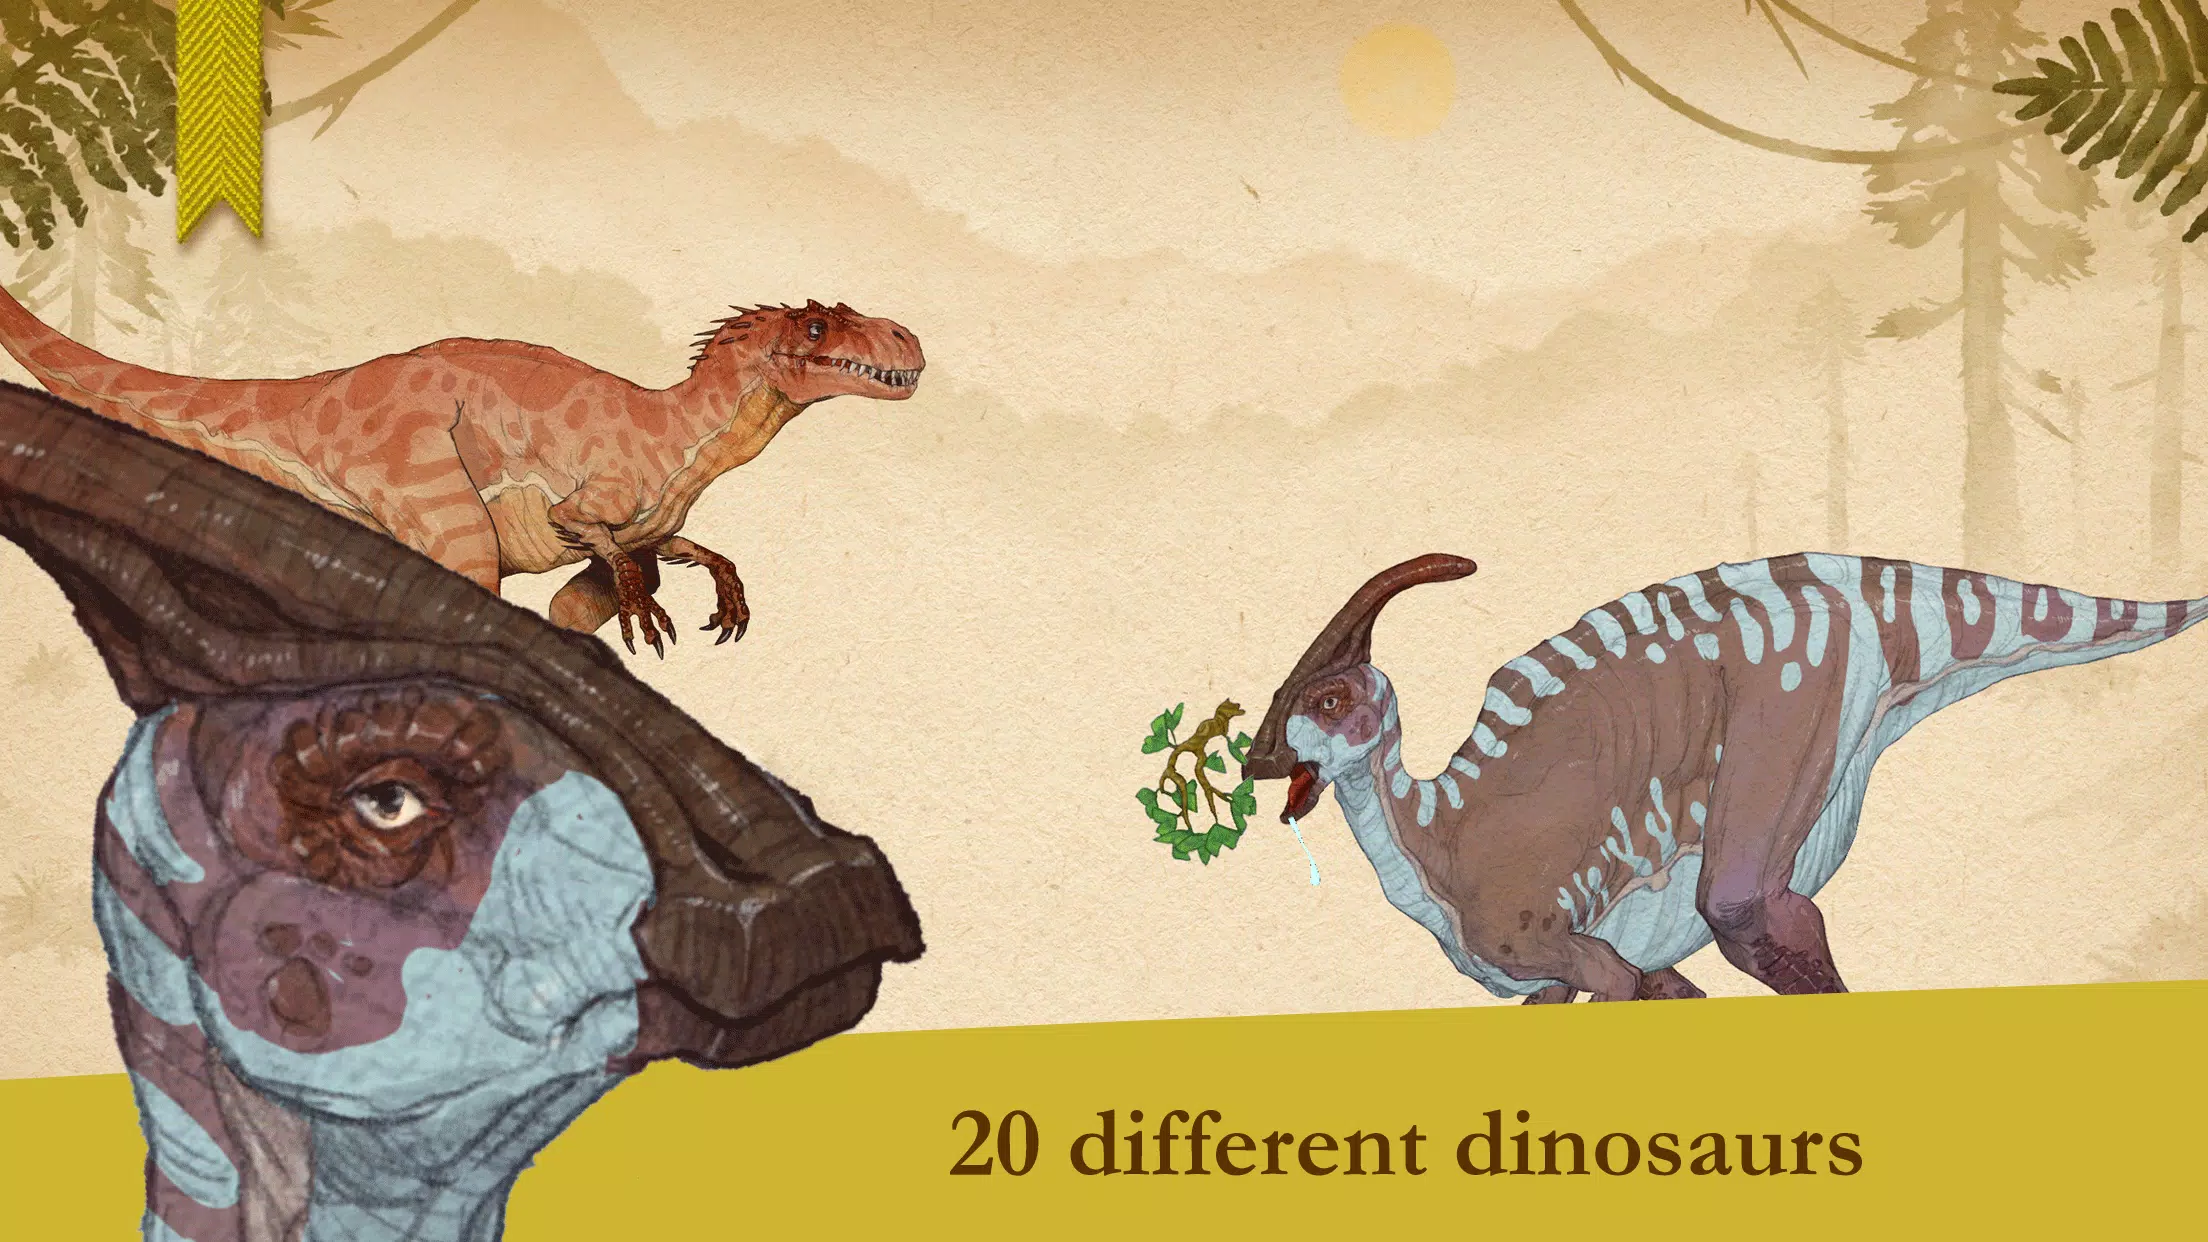 Download Tabuada do Dino for Android - Tabuada do Dino APK